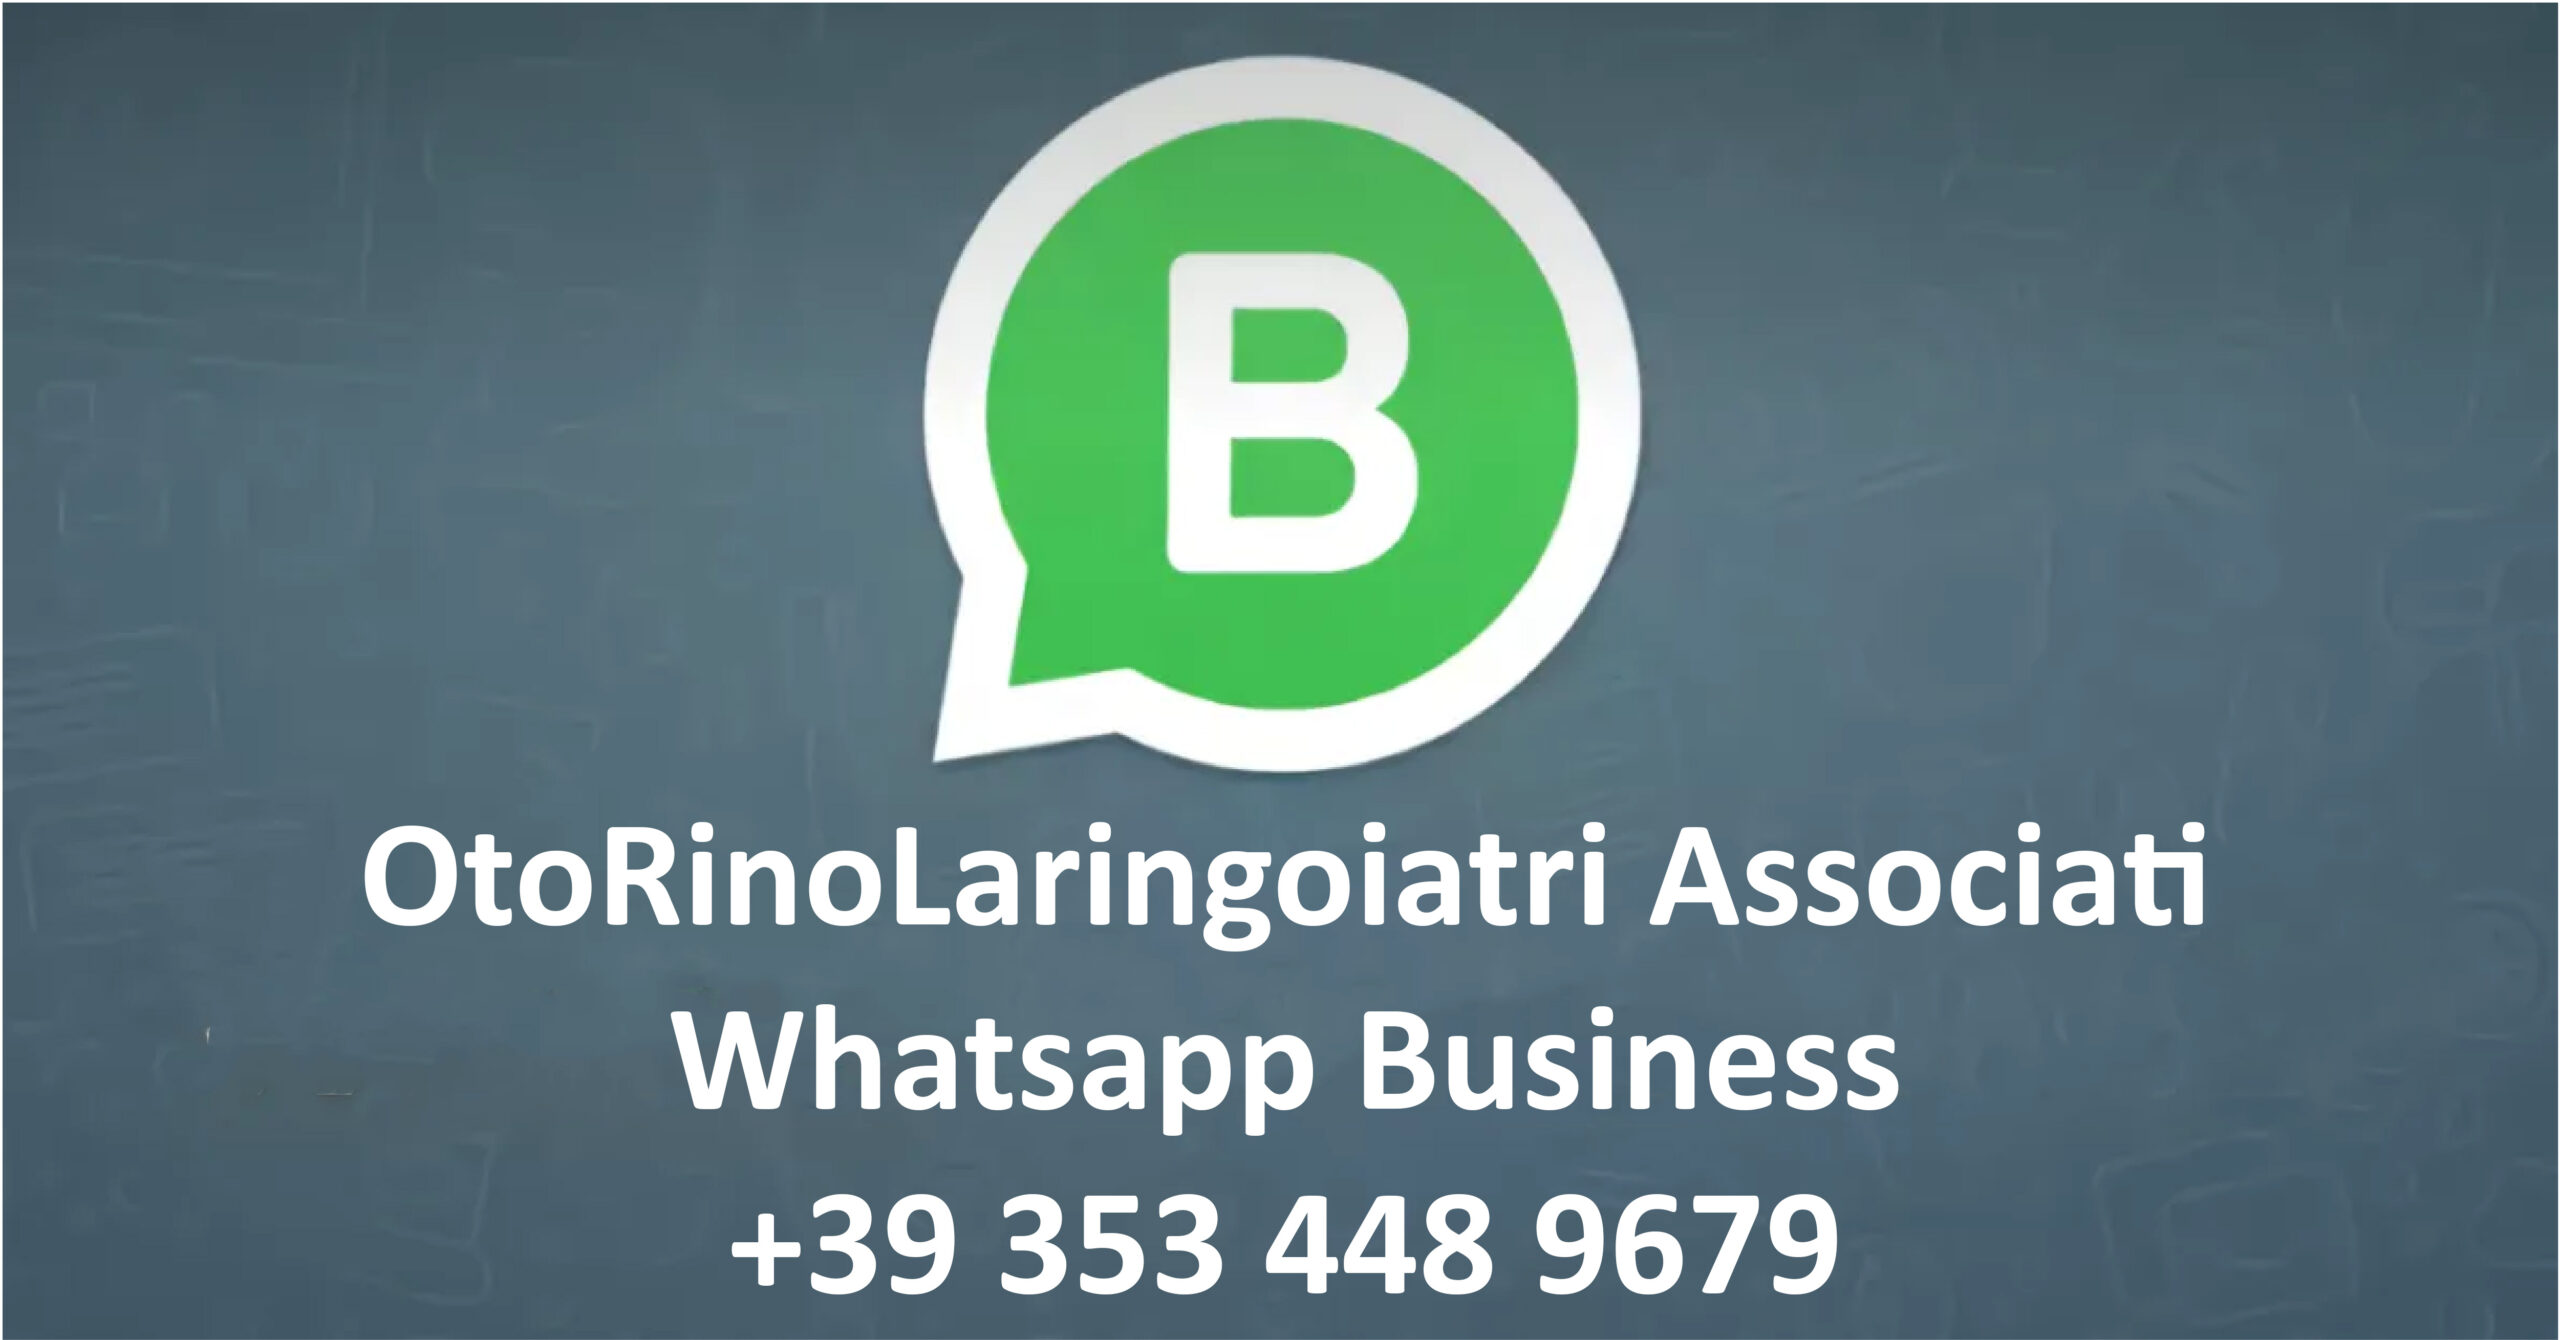 WhatsApp-Business-1200x628-02